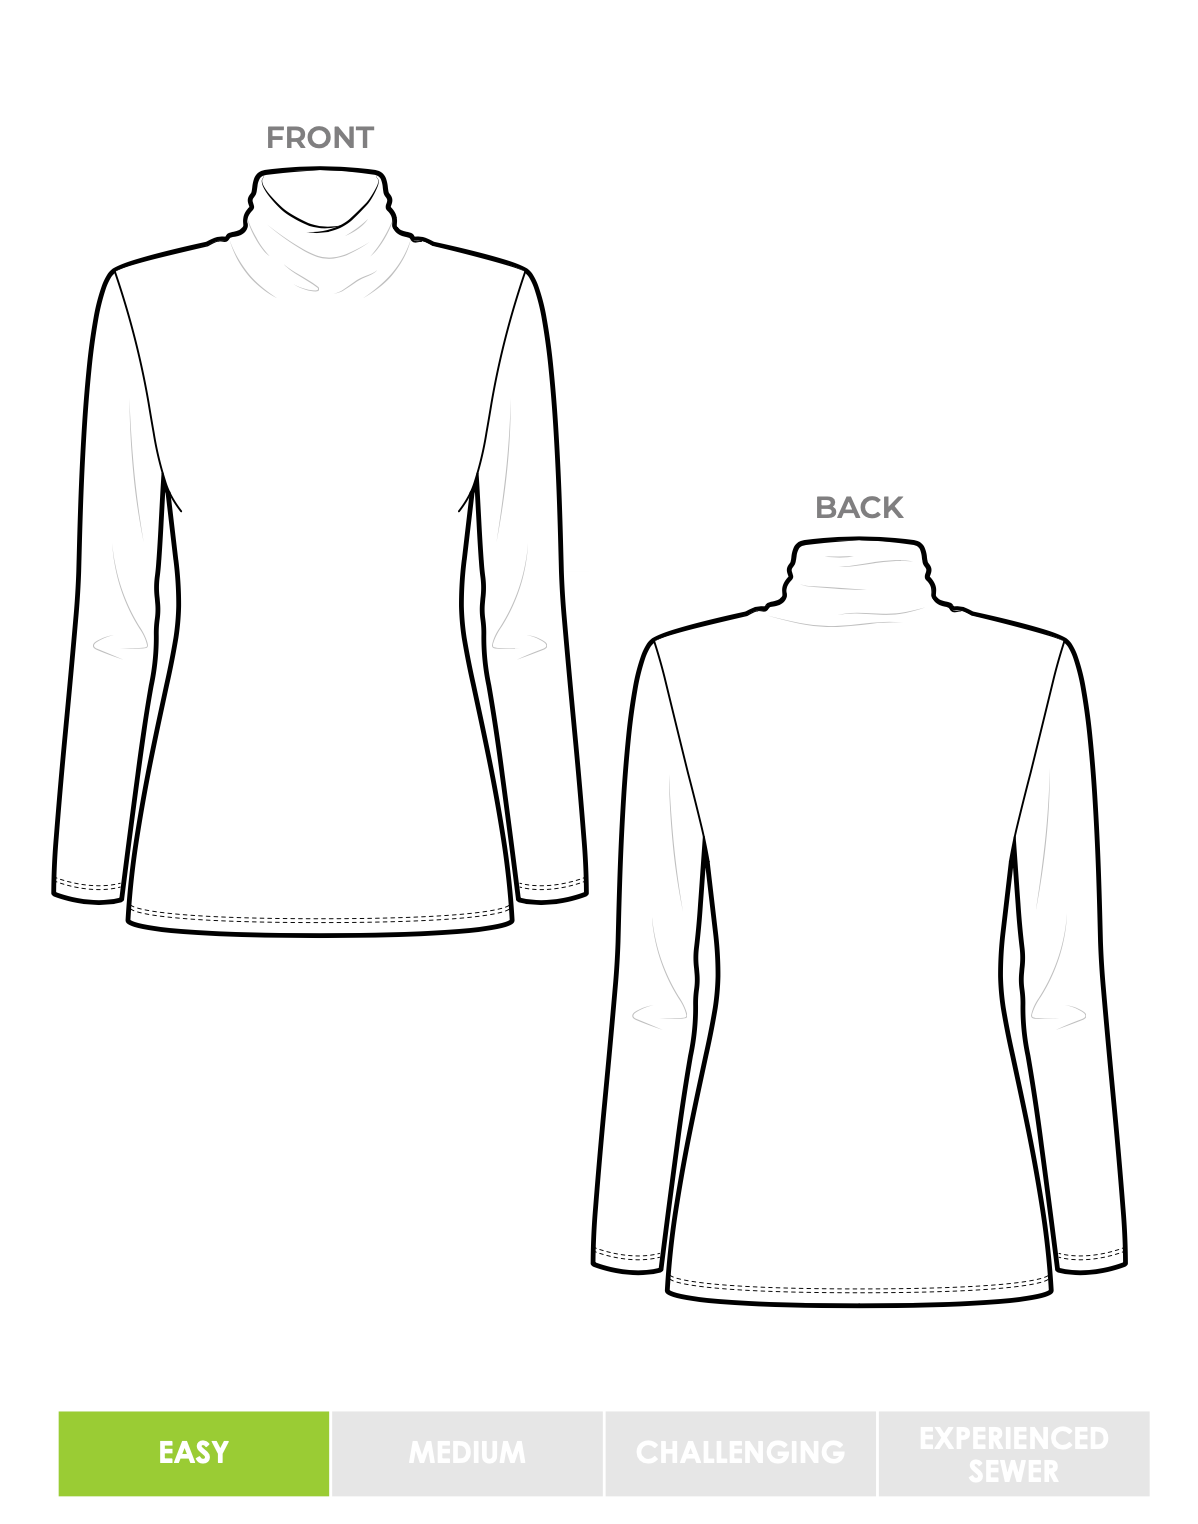 Style ARC - Debra Zebra Knit Top (Sizes 4-16)  Sewing Pattern